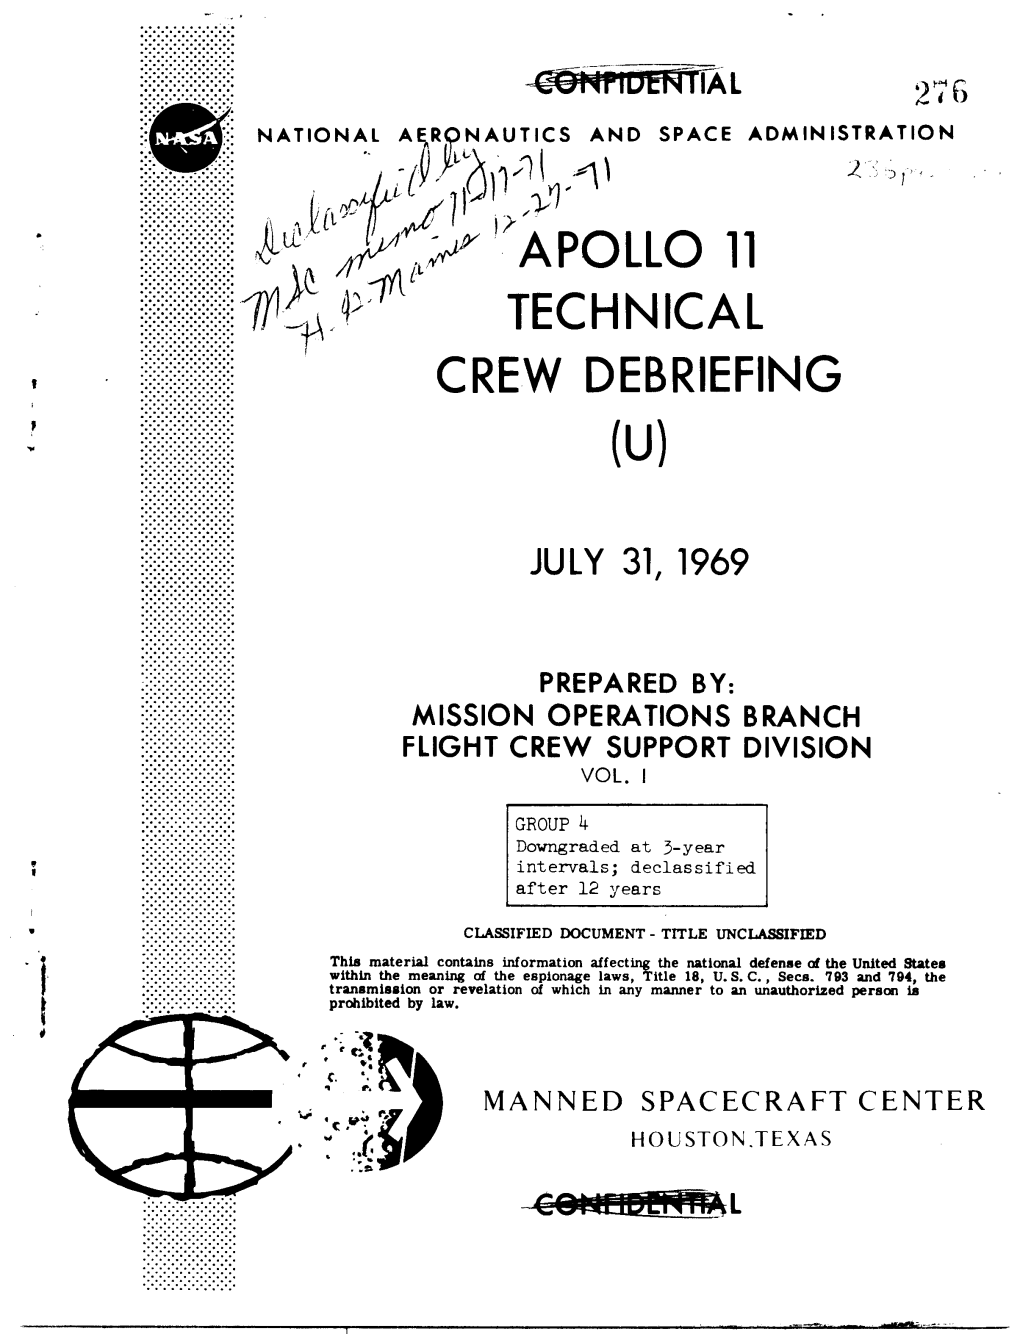 Apollo 11 Technical Crew Debriefing, Volume 1